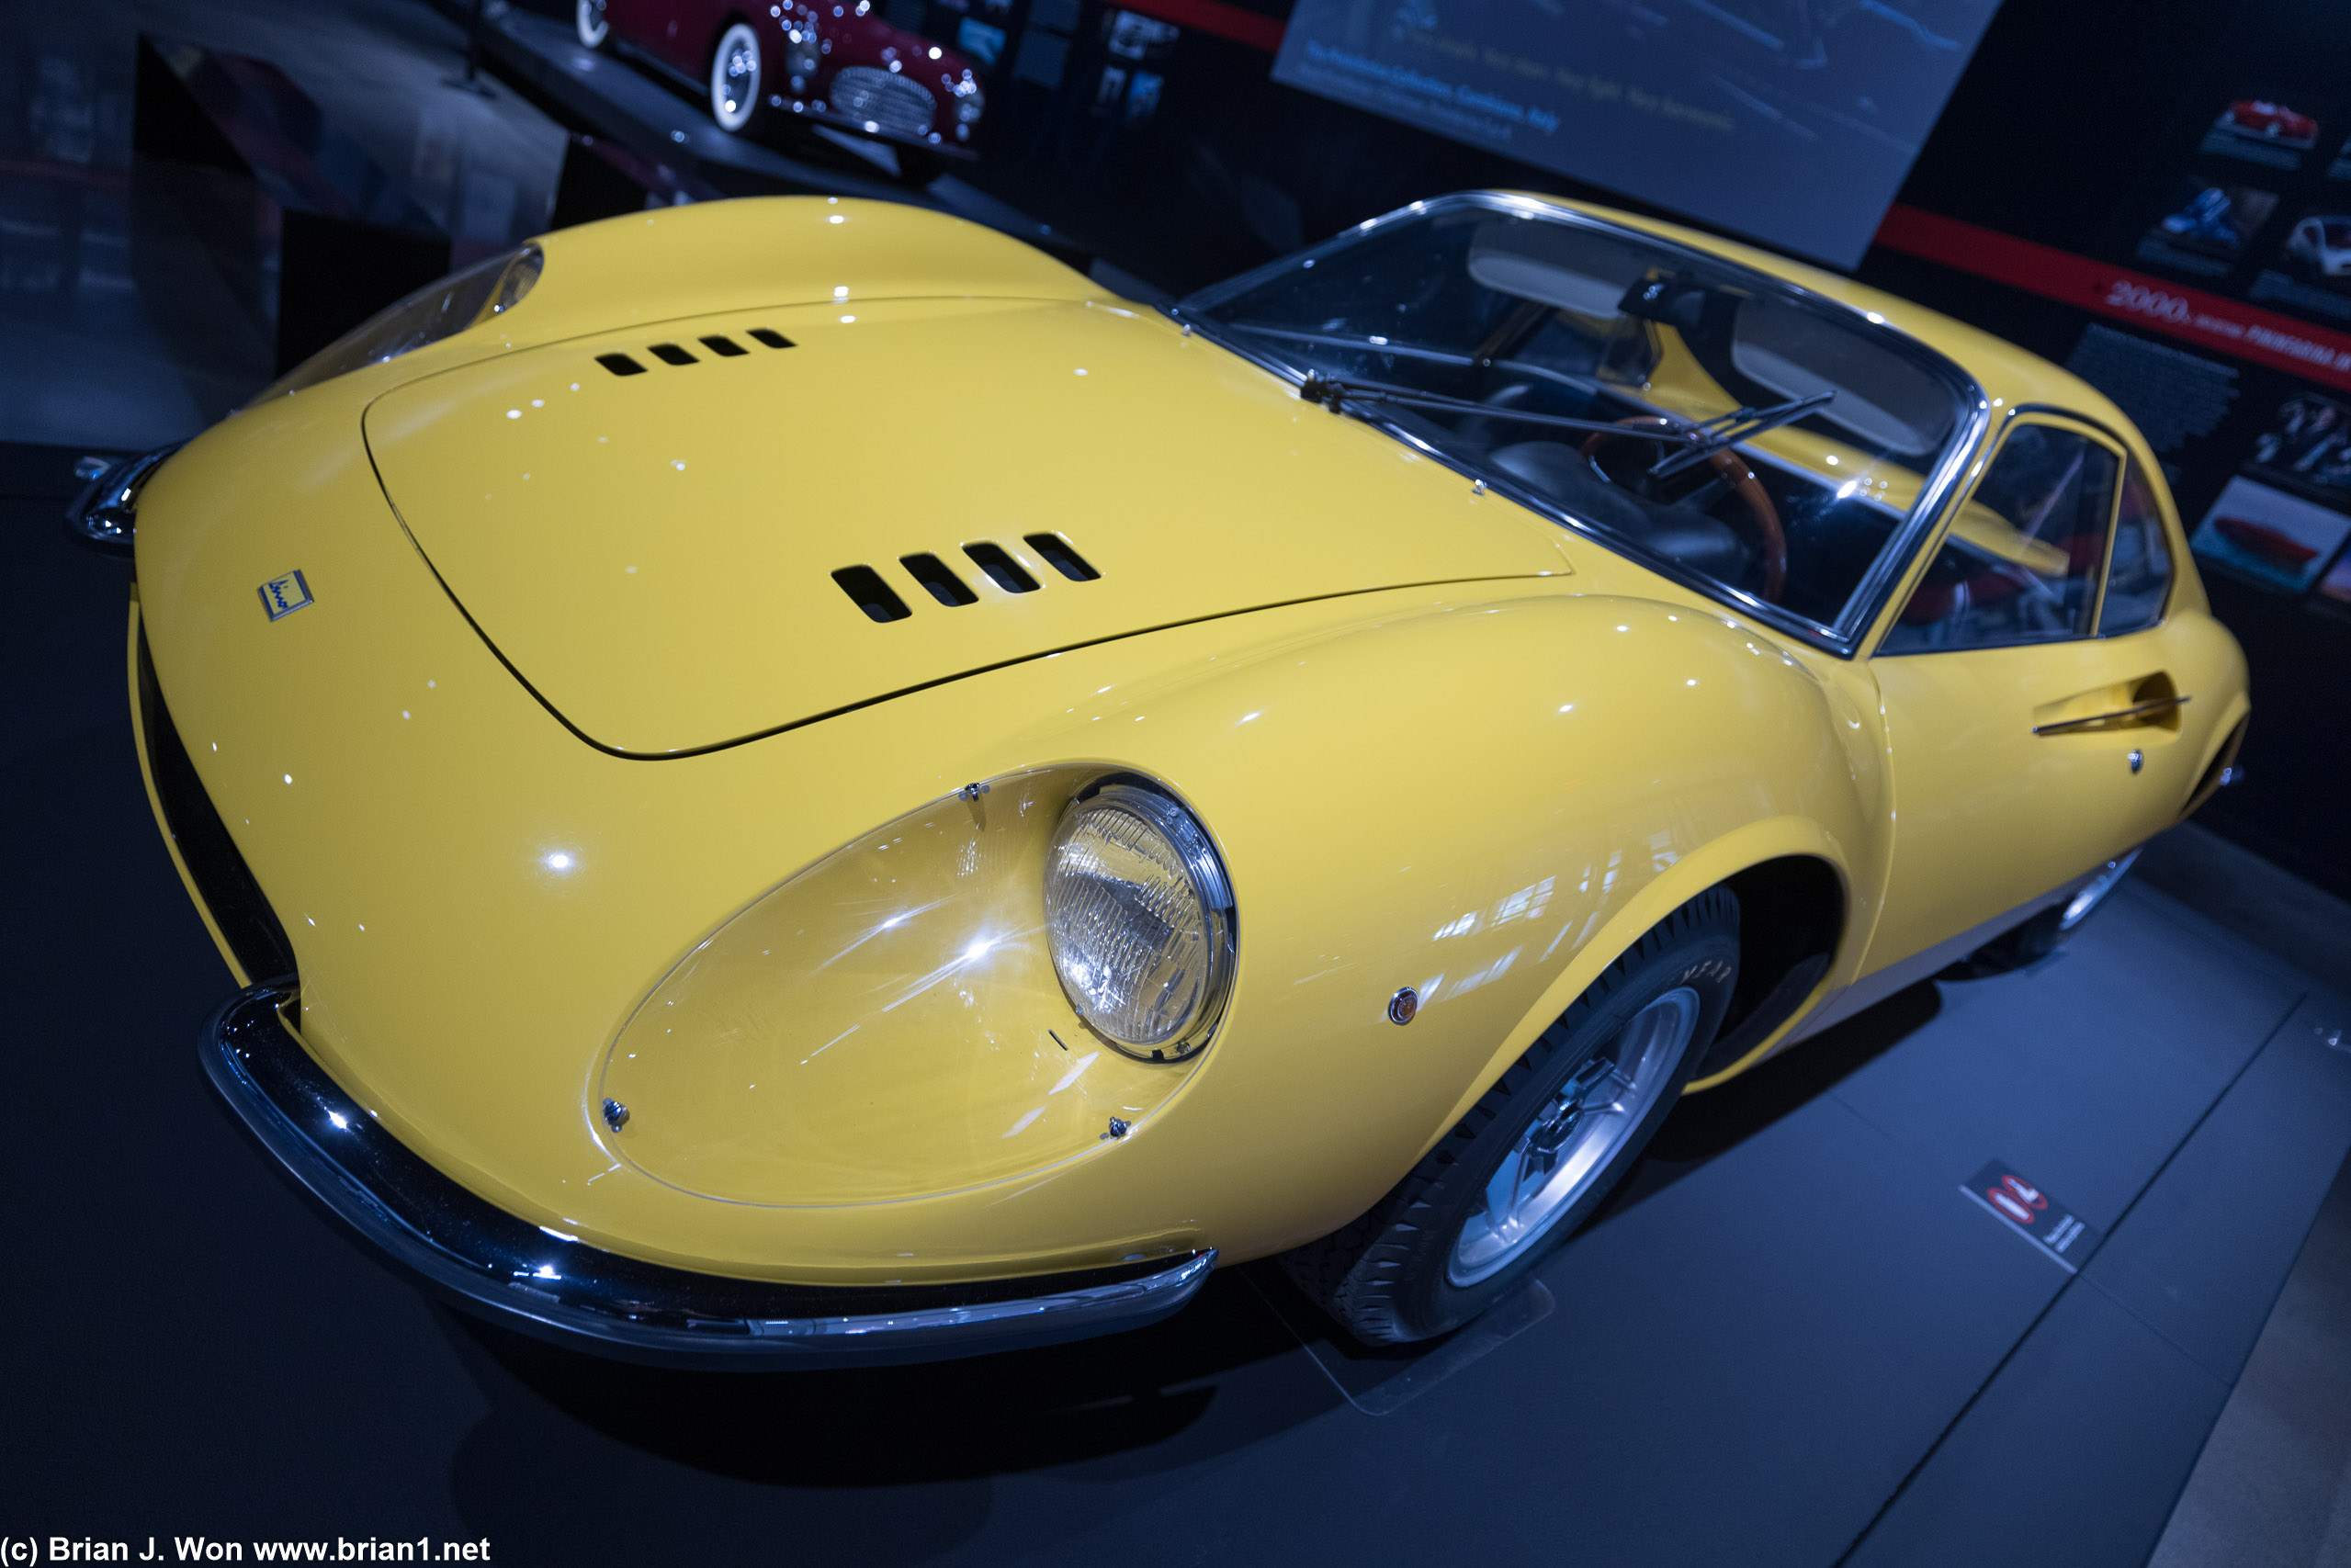 1966 Ferrari Dino Berlinetta 206 GT prototype.